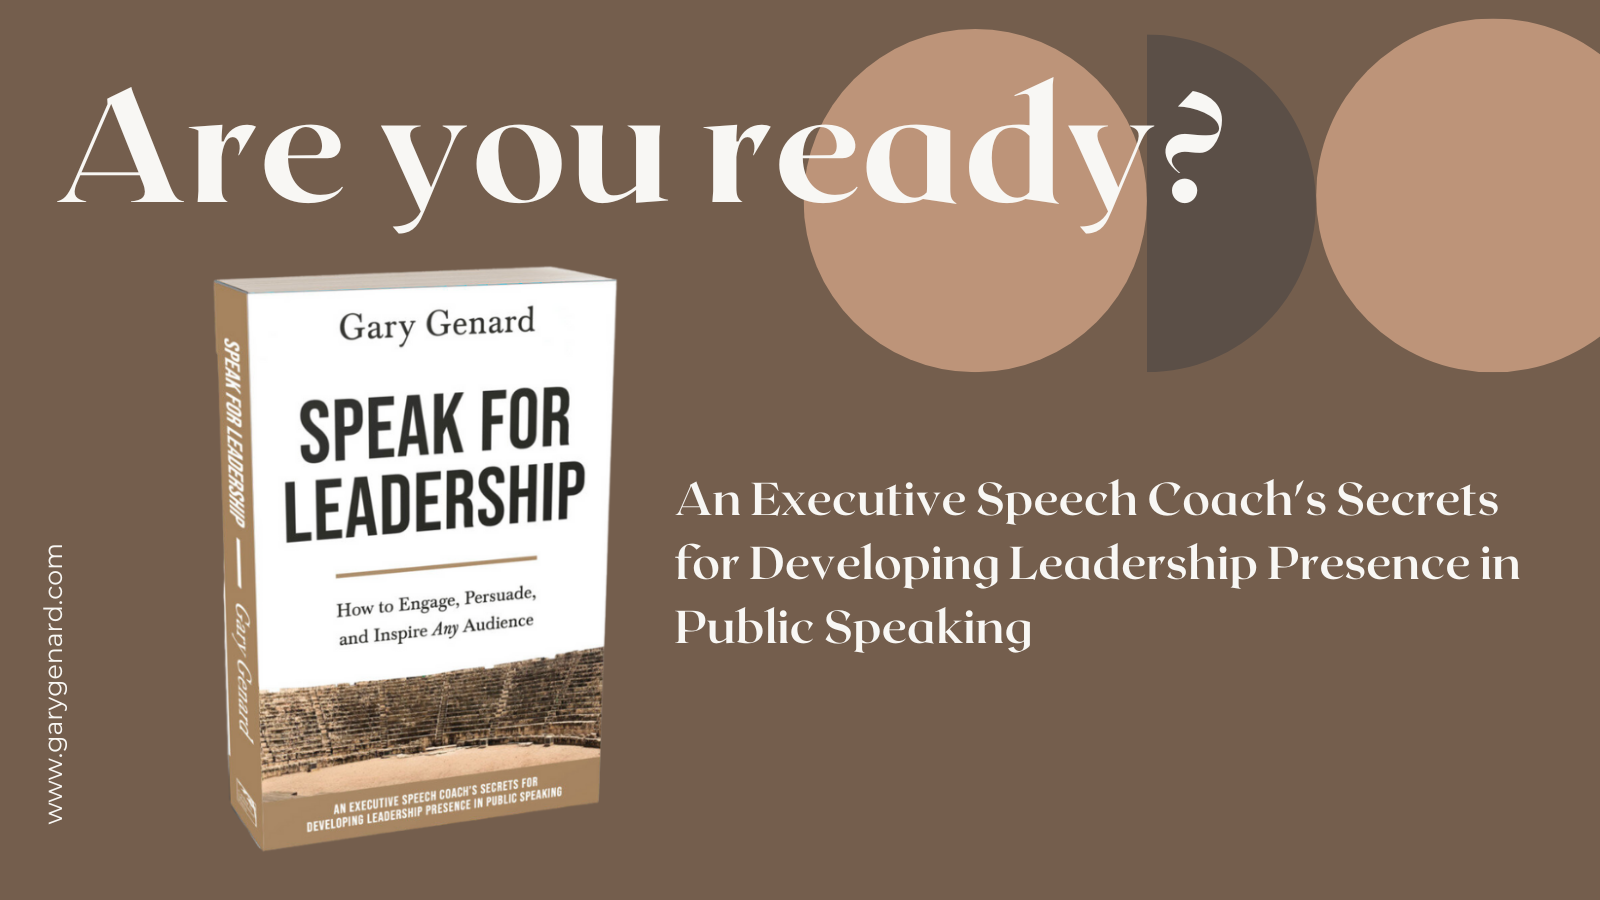 Dr. Gary Genard's secrets of speaking as a leader in business, Speak for Leadership.